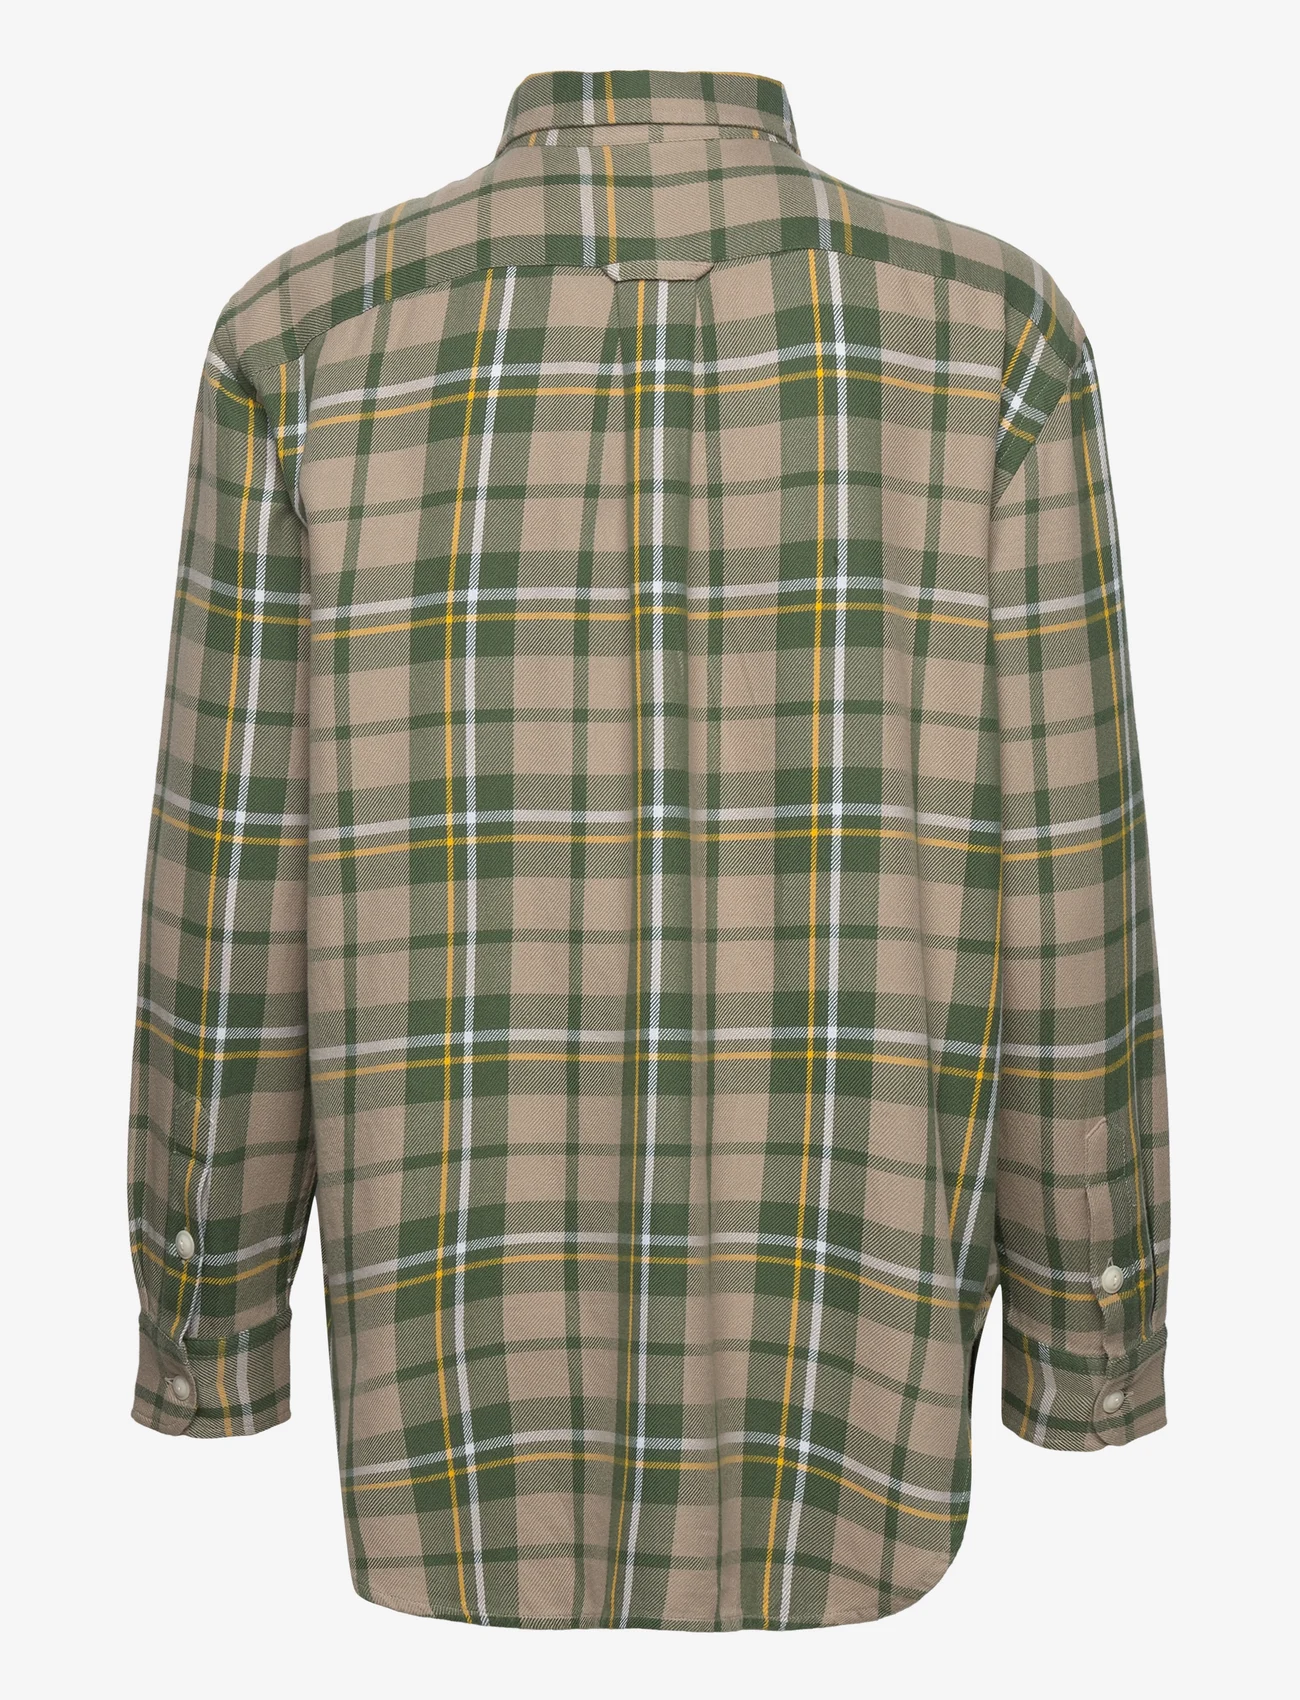 Polo Ralph Lauren - Relaxed Fit Plaid Twill Utility Shirt - marškiniai ilgomis rankovėmis - 1474 tan/green mu - 1